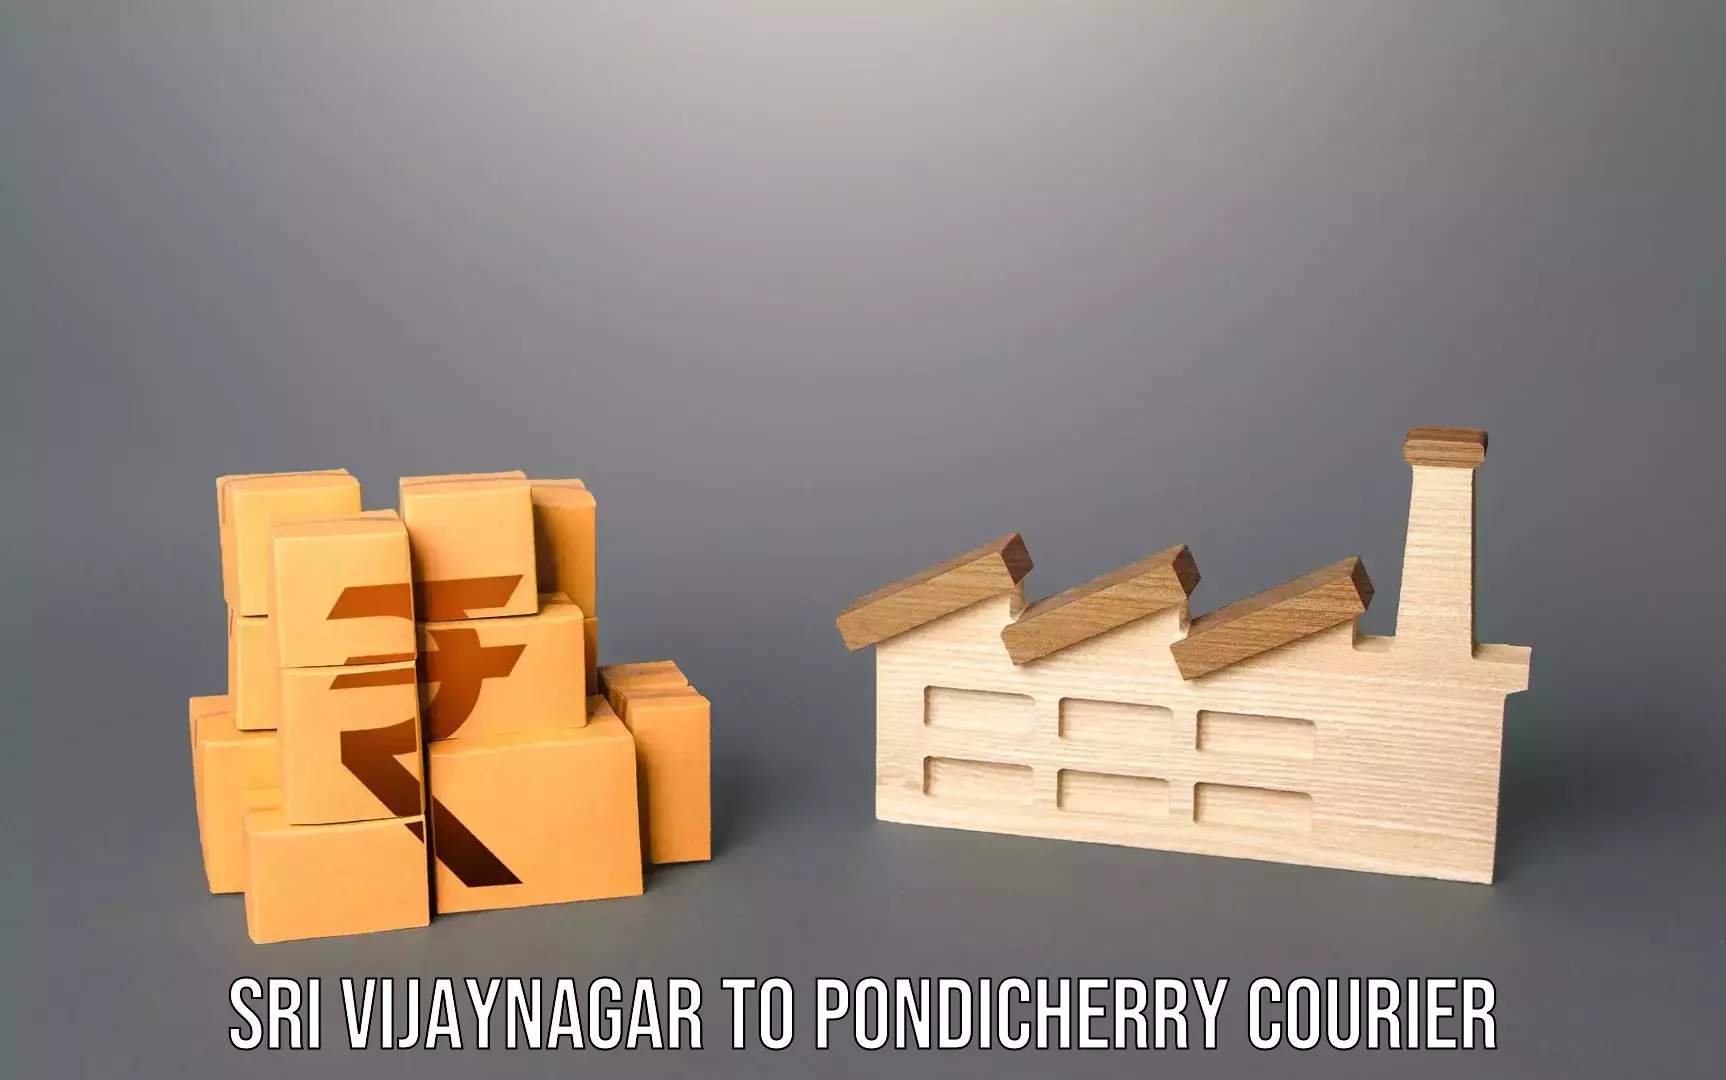 Emergency baggage service Sri Vijaynagar to Pondicherry